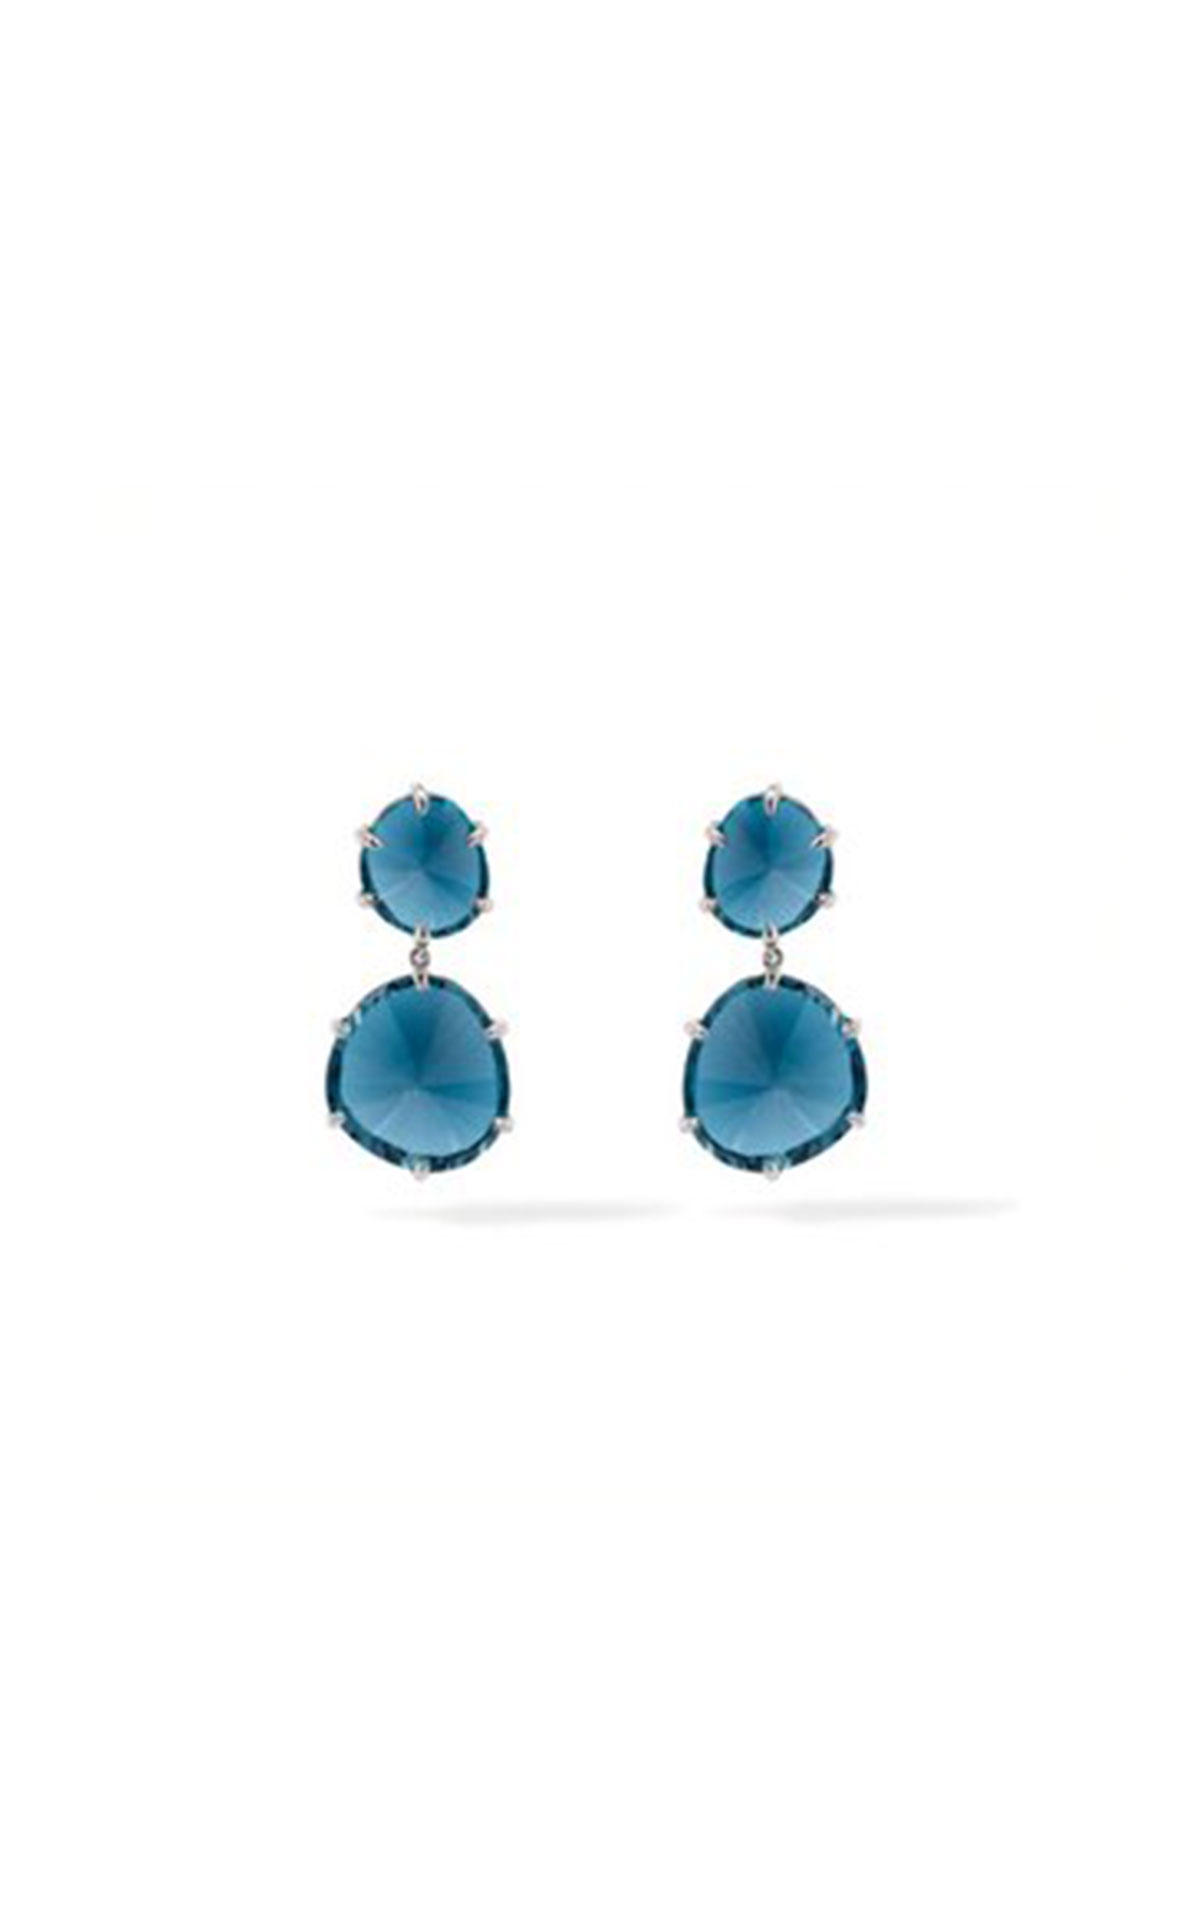 Annoushka Blue topaz drop earrings from Bicester Village